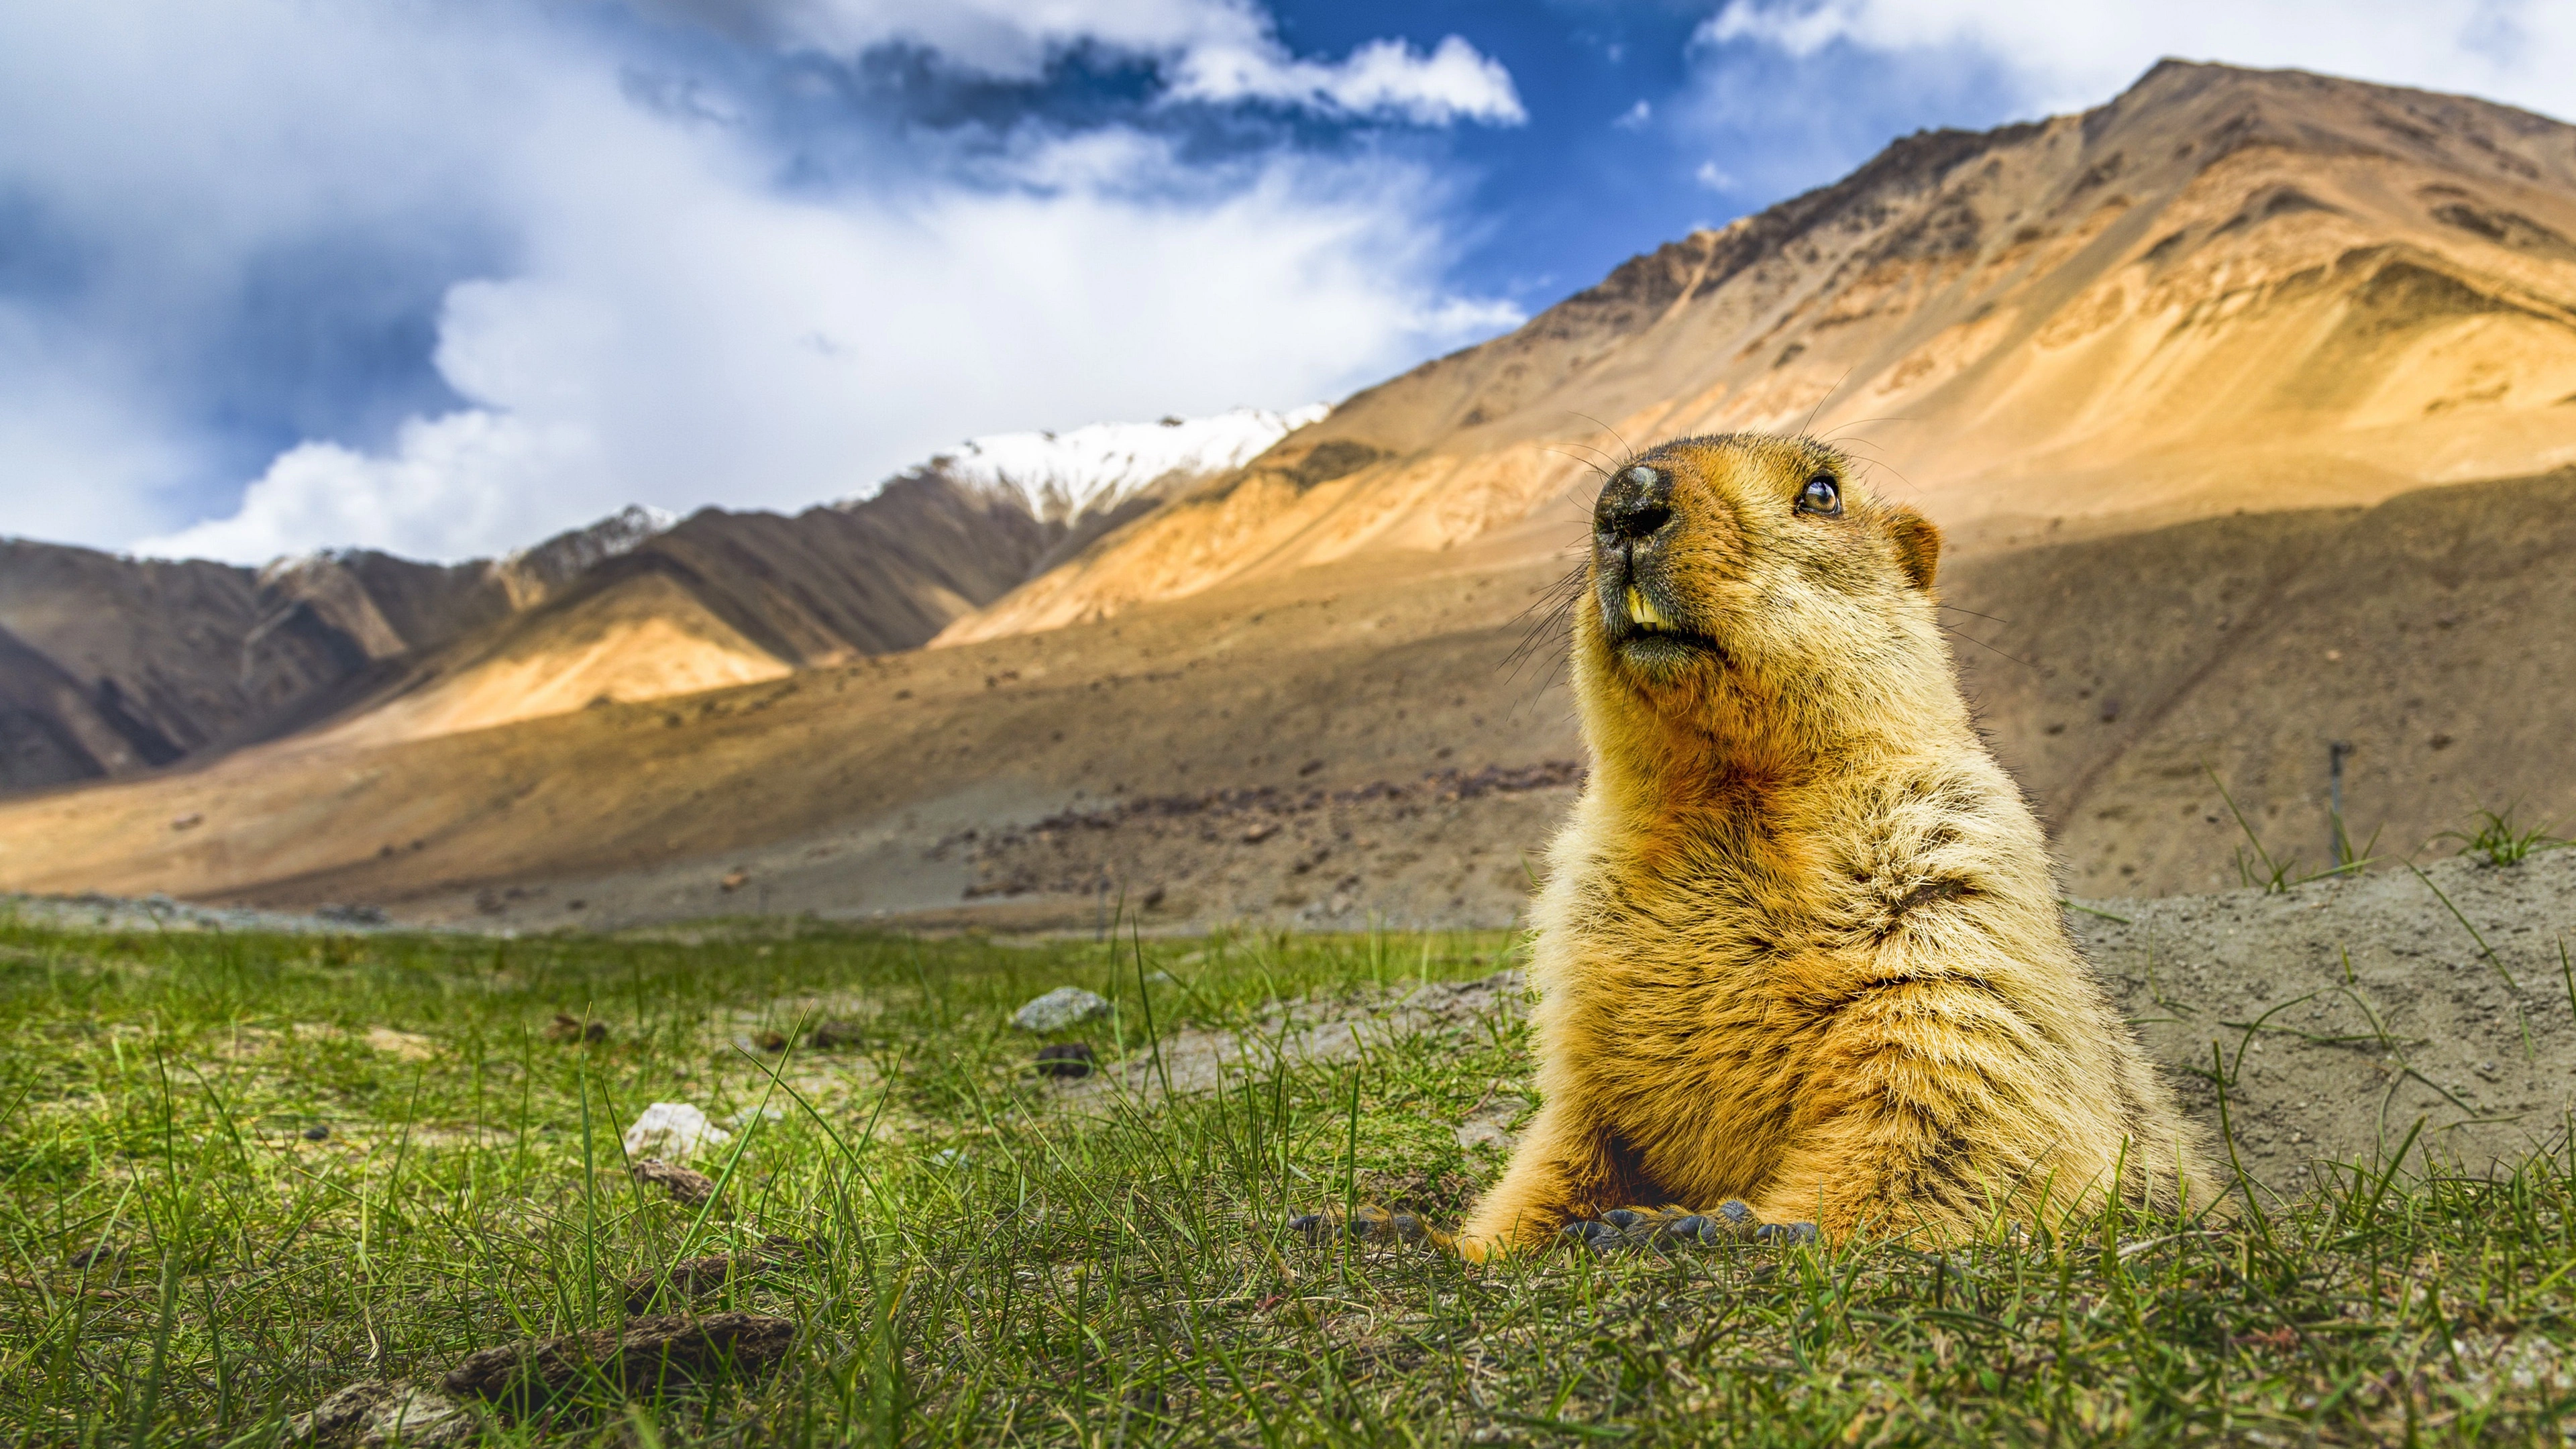 Himayalan Marmot found in Ladakh